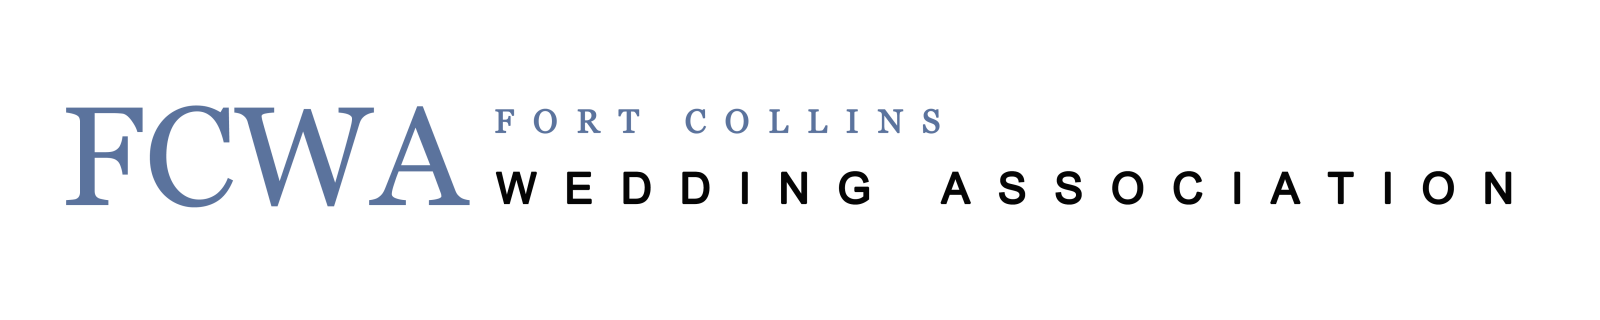 Fort Collins Wedding Association